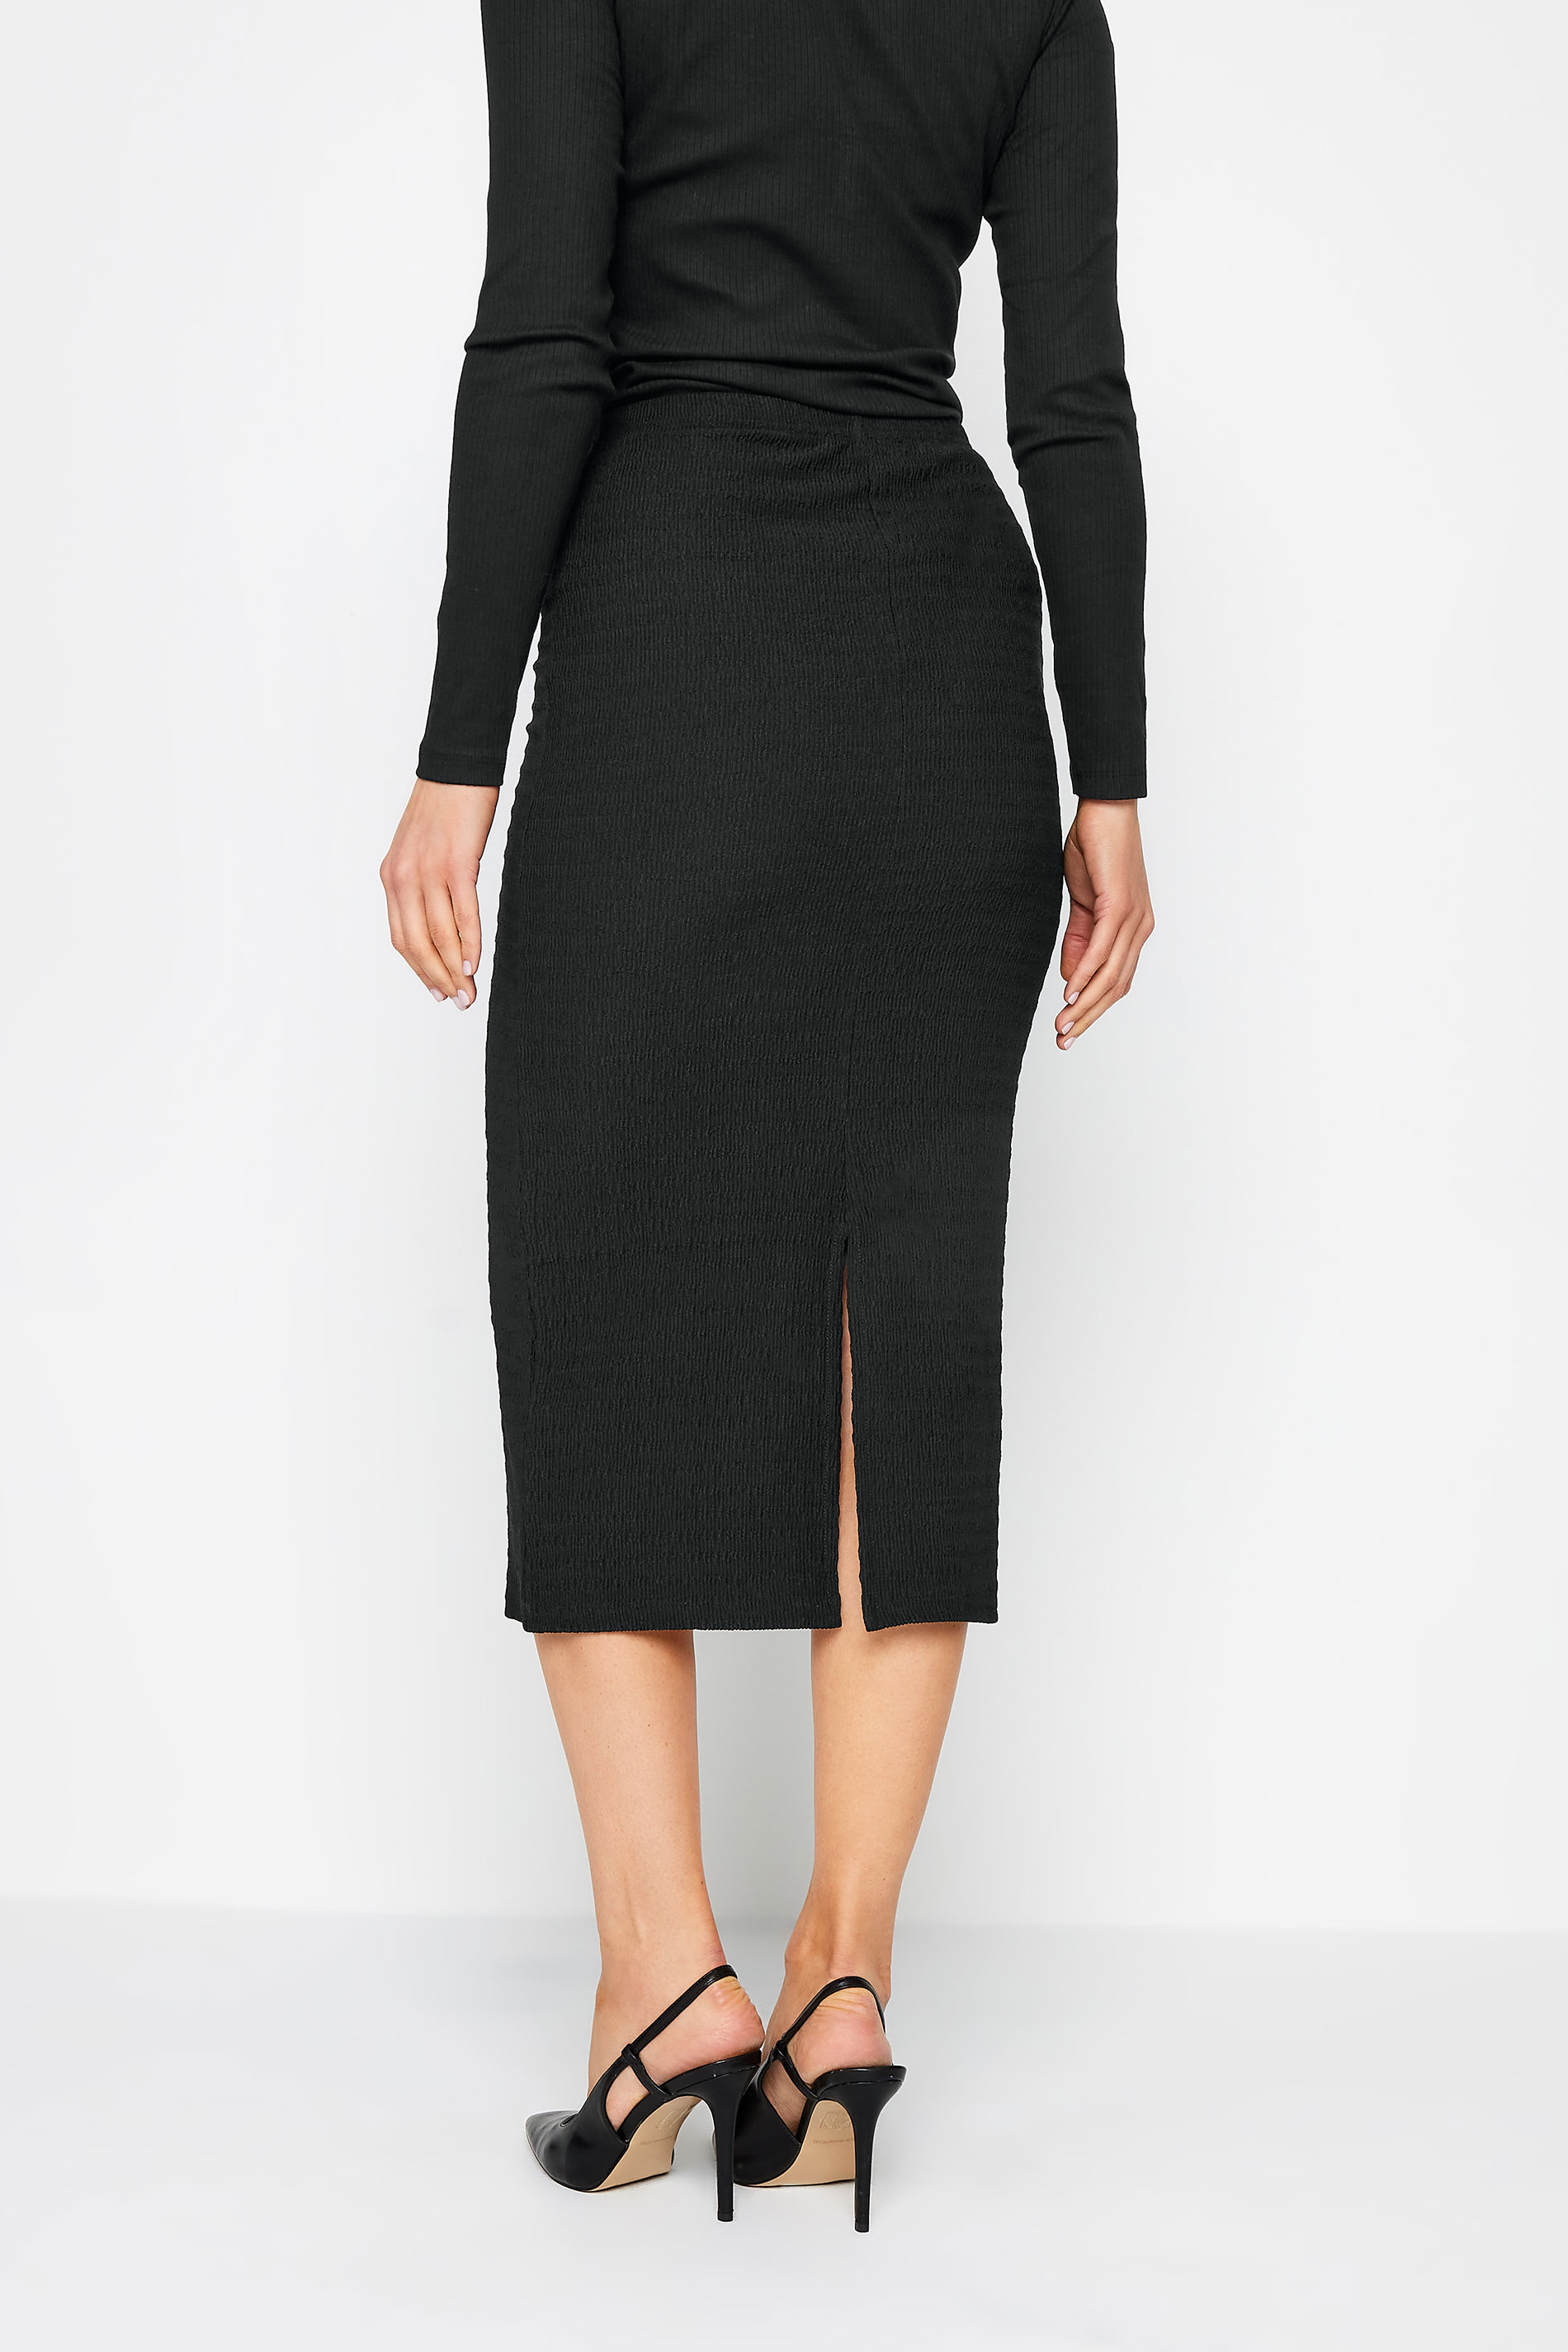 LTS Tall Black Textured Tube Skirt | Long Tall Sally 3